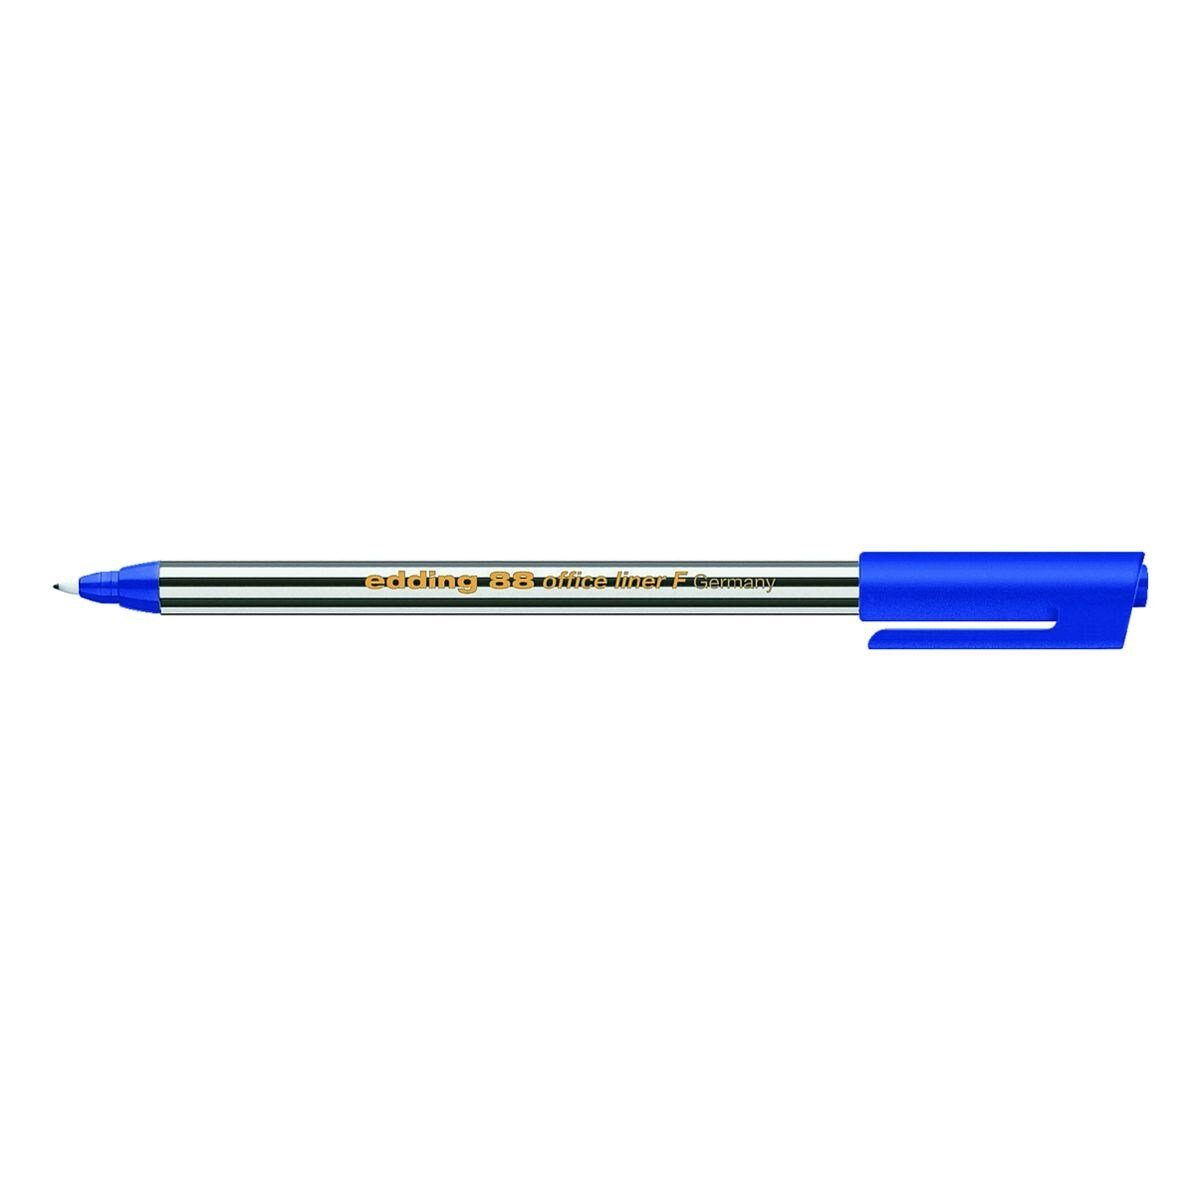 blau Strichstärke mm F, 0,6 88 Fineliner edding